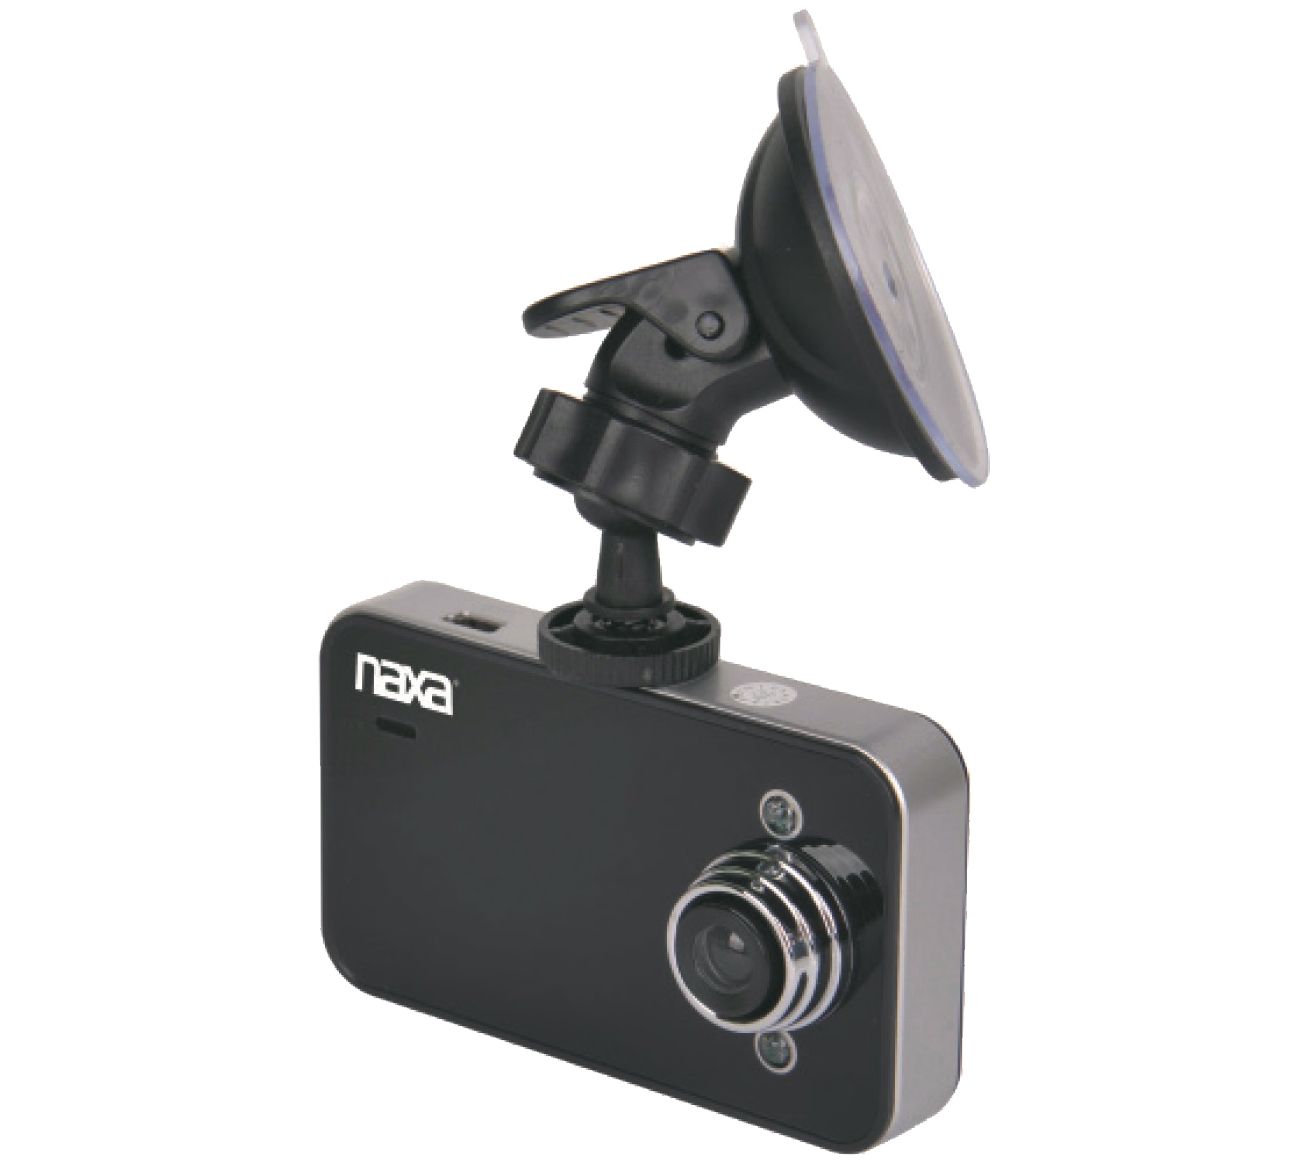  Naxa NCV-6000 2.4-Inch HD LCD Display Car Dash Cam